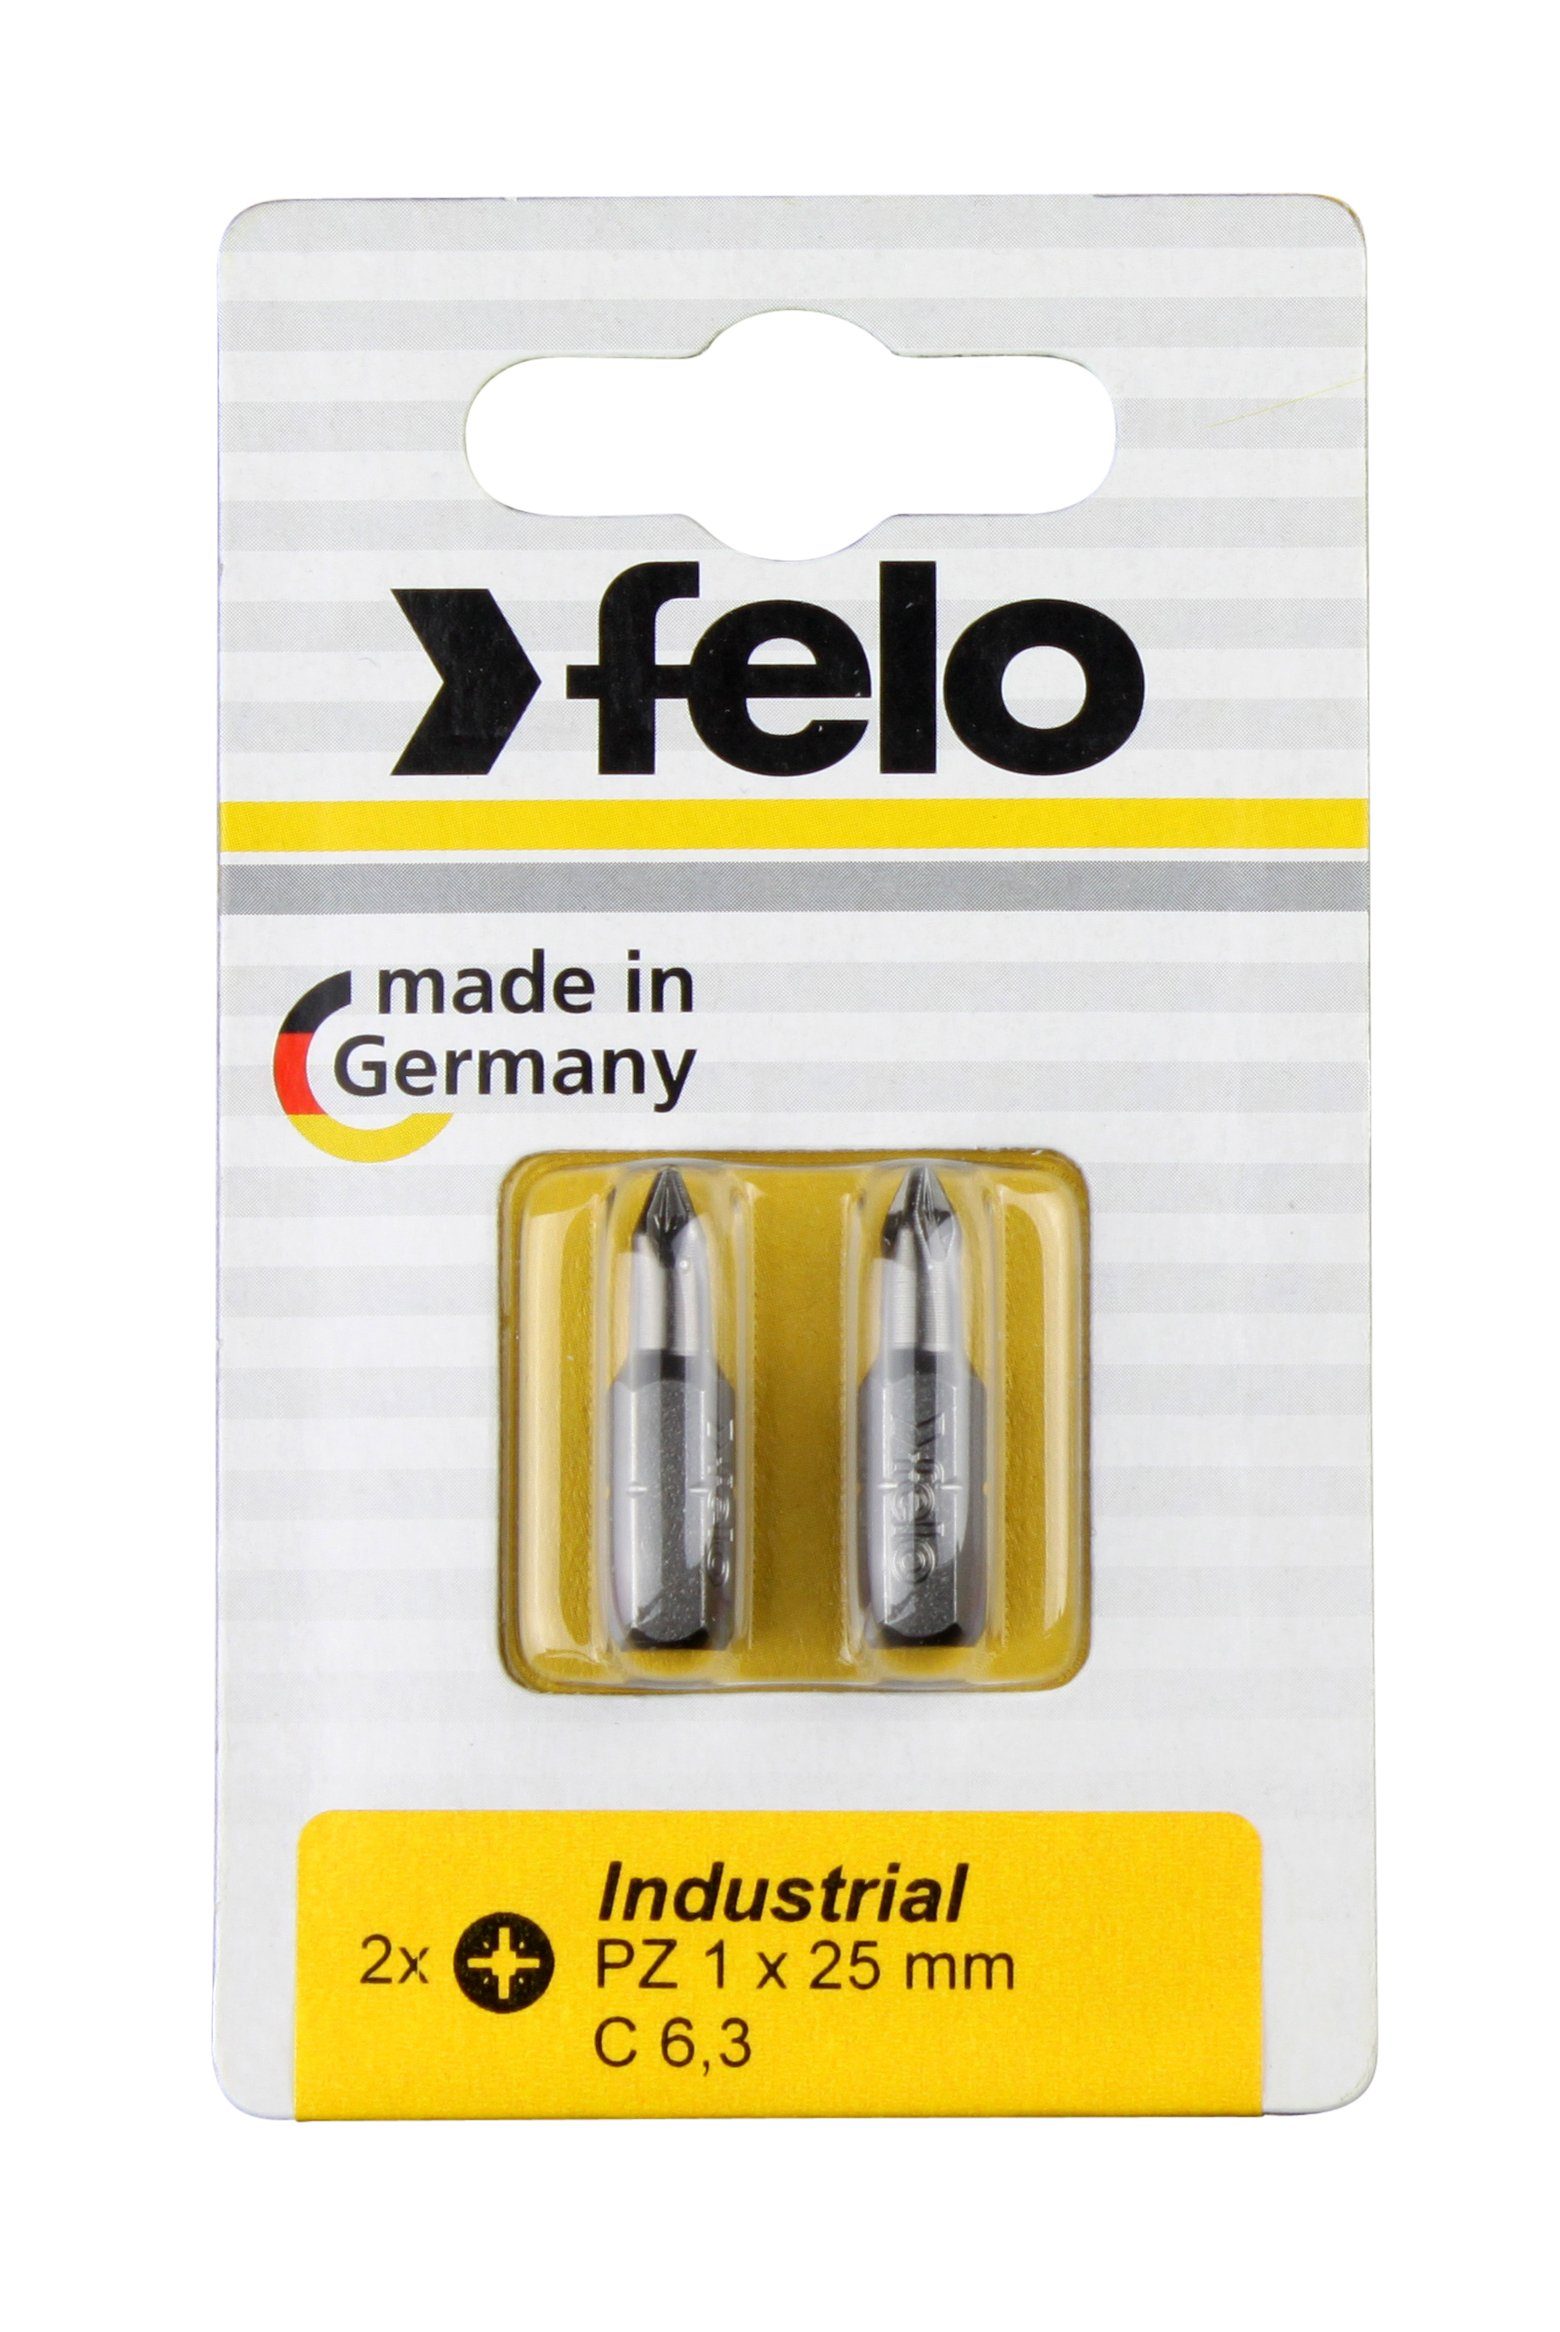 Felo Kreuzschlitz-Bit Felo 25mm, Bit, 2 auf PZ Stk / Industrie 1 3 6,3 3 / Karte C PZ PZ x